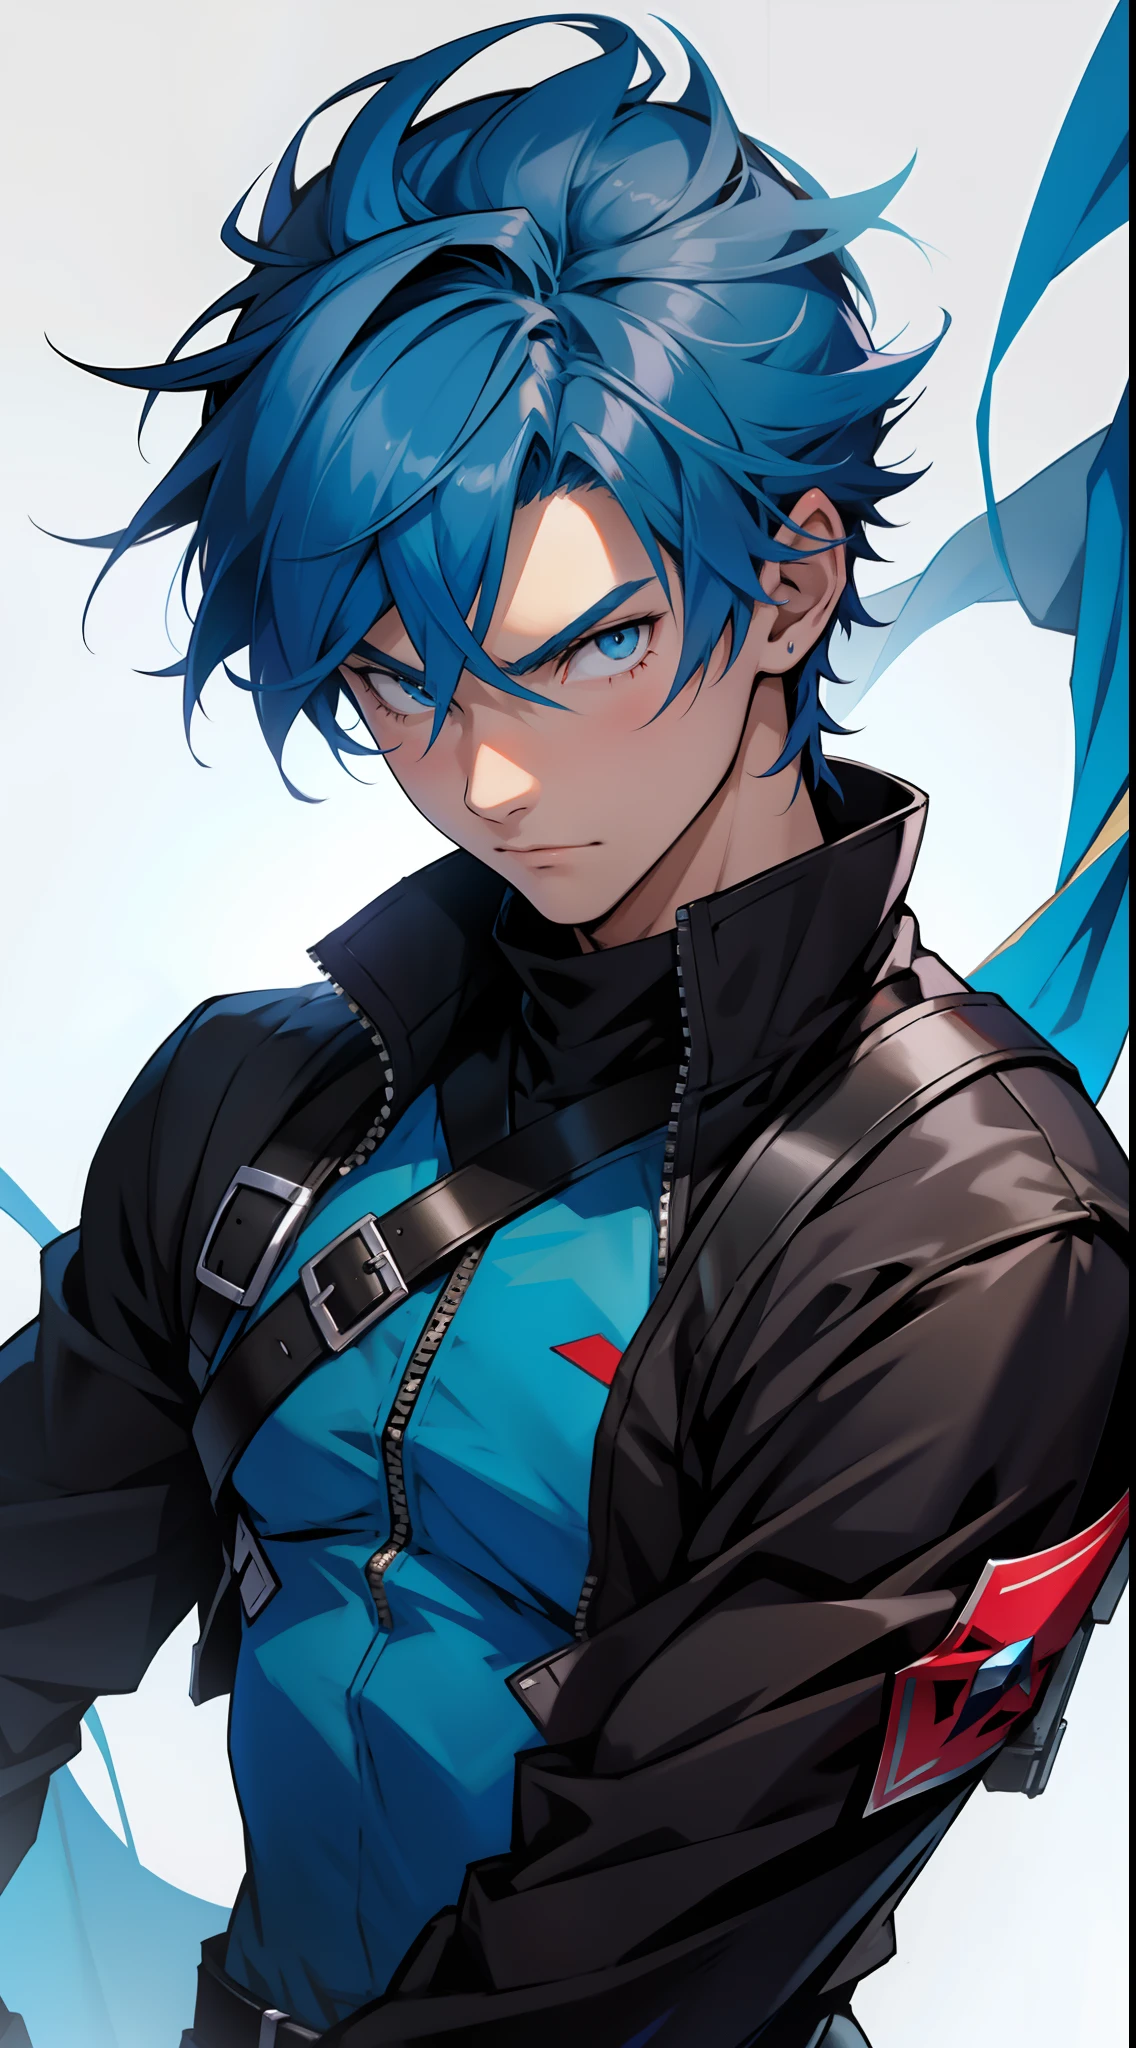 a anime teen guy, with short blue hair, villain face, wearing assasins clothes